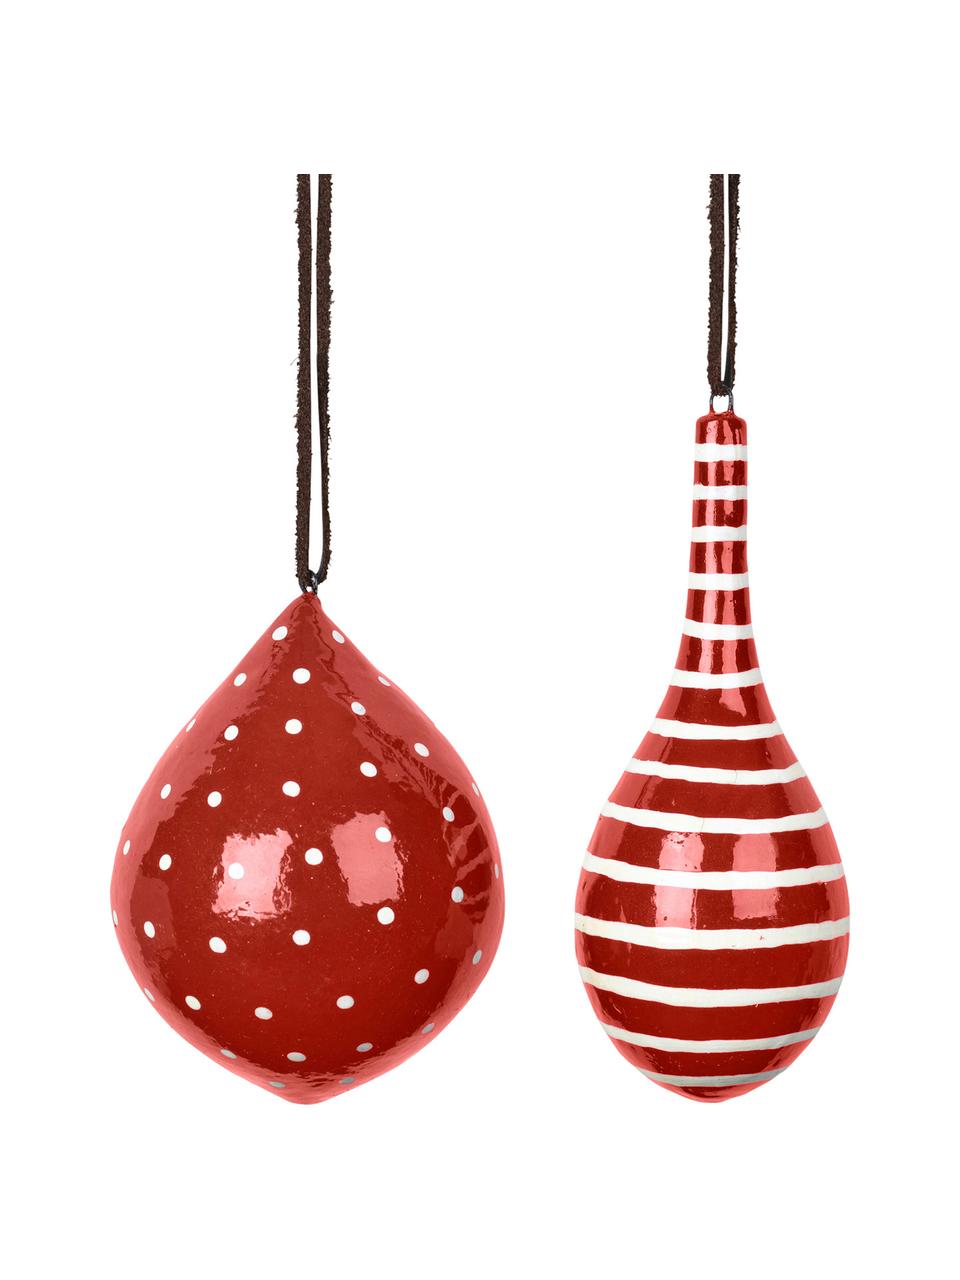 Weihnachtskugel-Set Dyo, 2-tlg., Pappe, laminiert, Rot, Weiss, Ø 10 cm